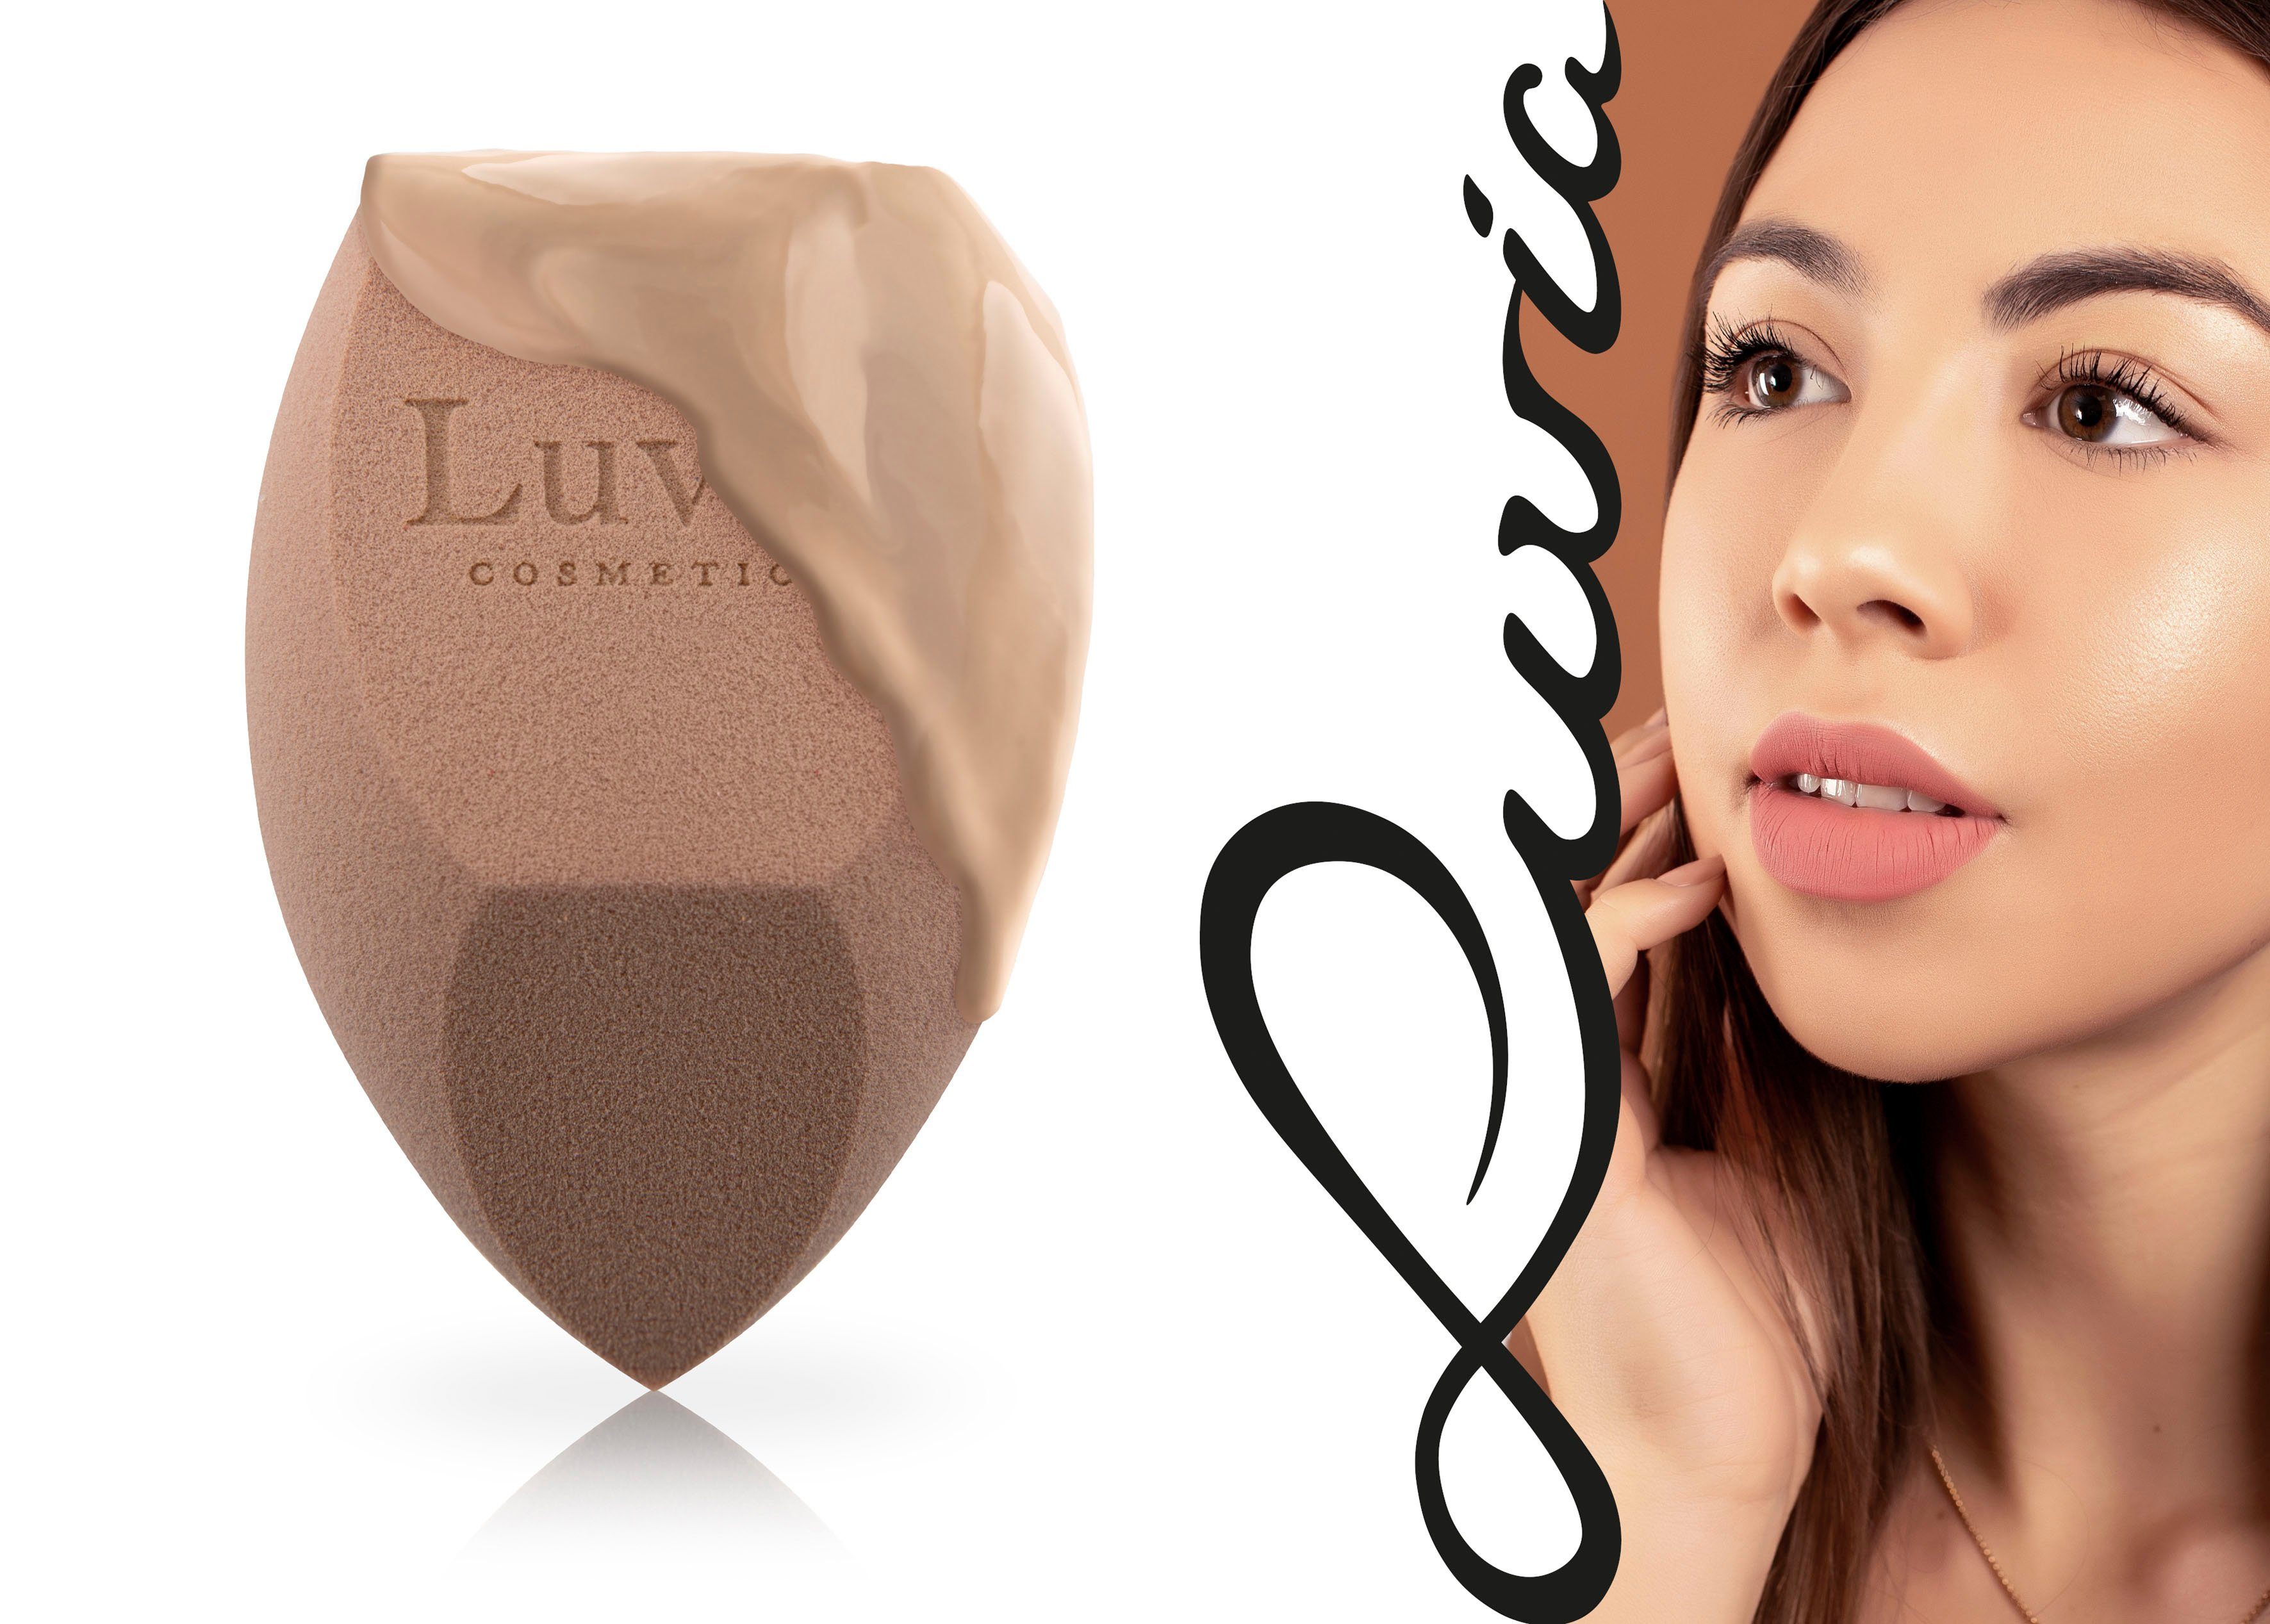 Luvia Cosmetics Make-up Sponge, Schwamm Body Schwamm Prime Vegan XXL Make-up